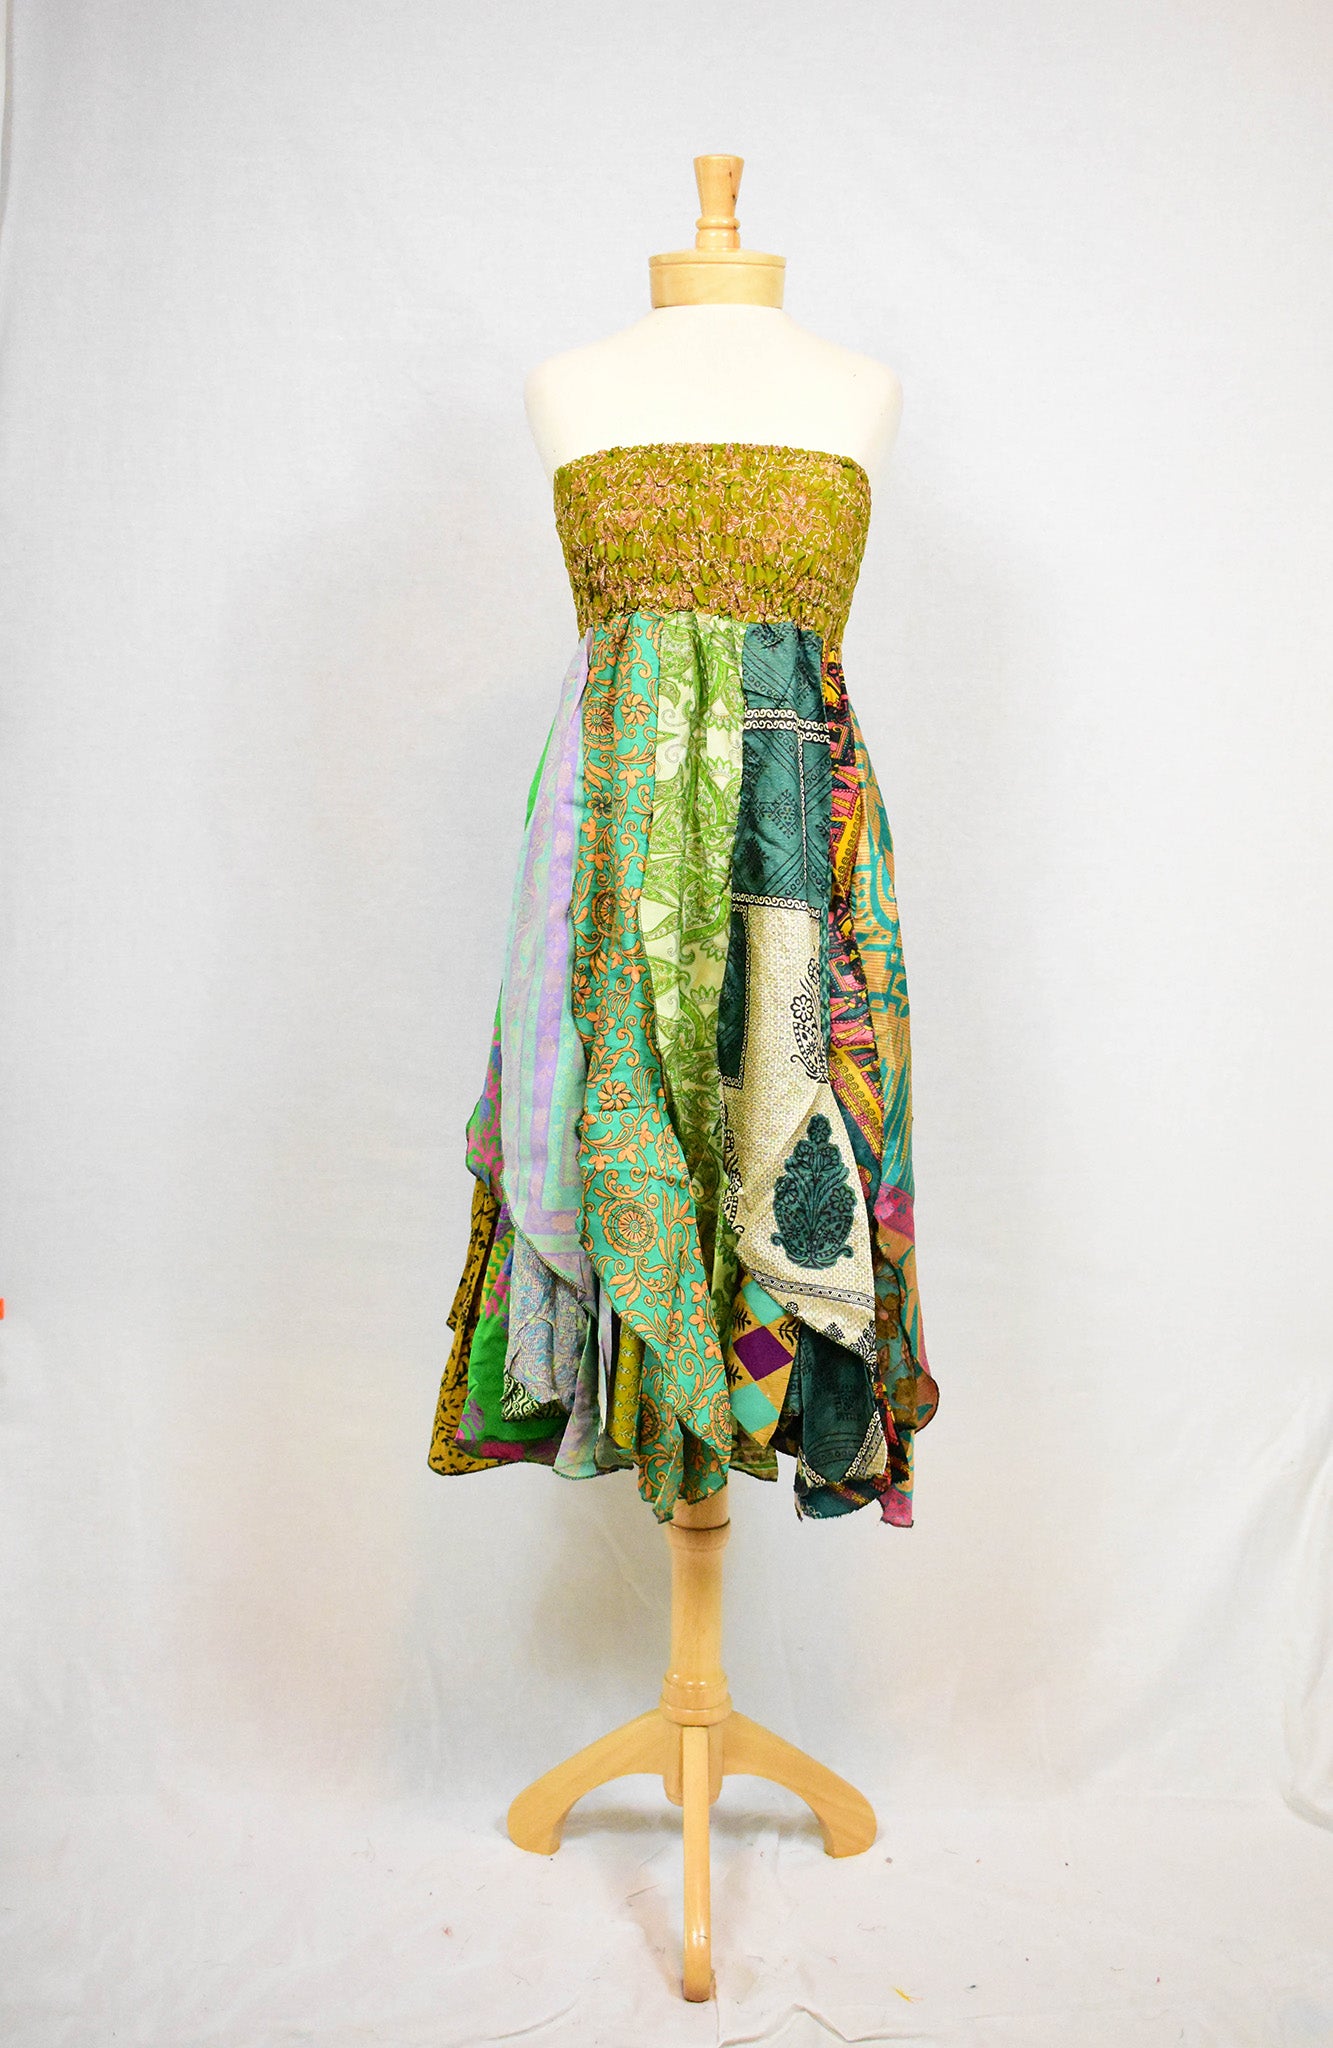 Fairy Dress Ruffle Skirt 7 Front View